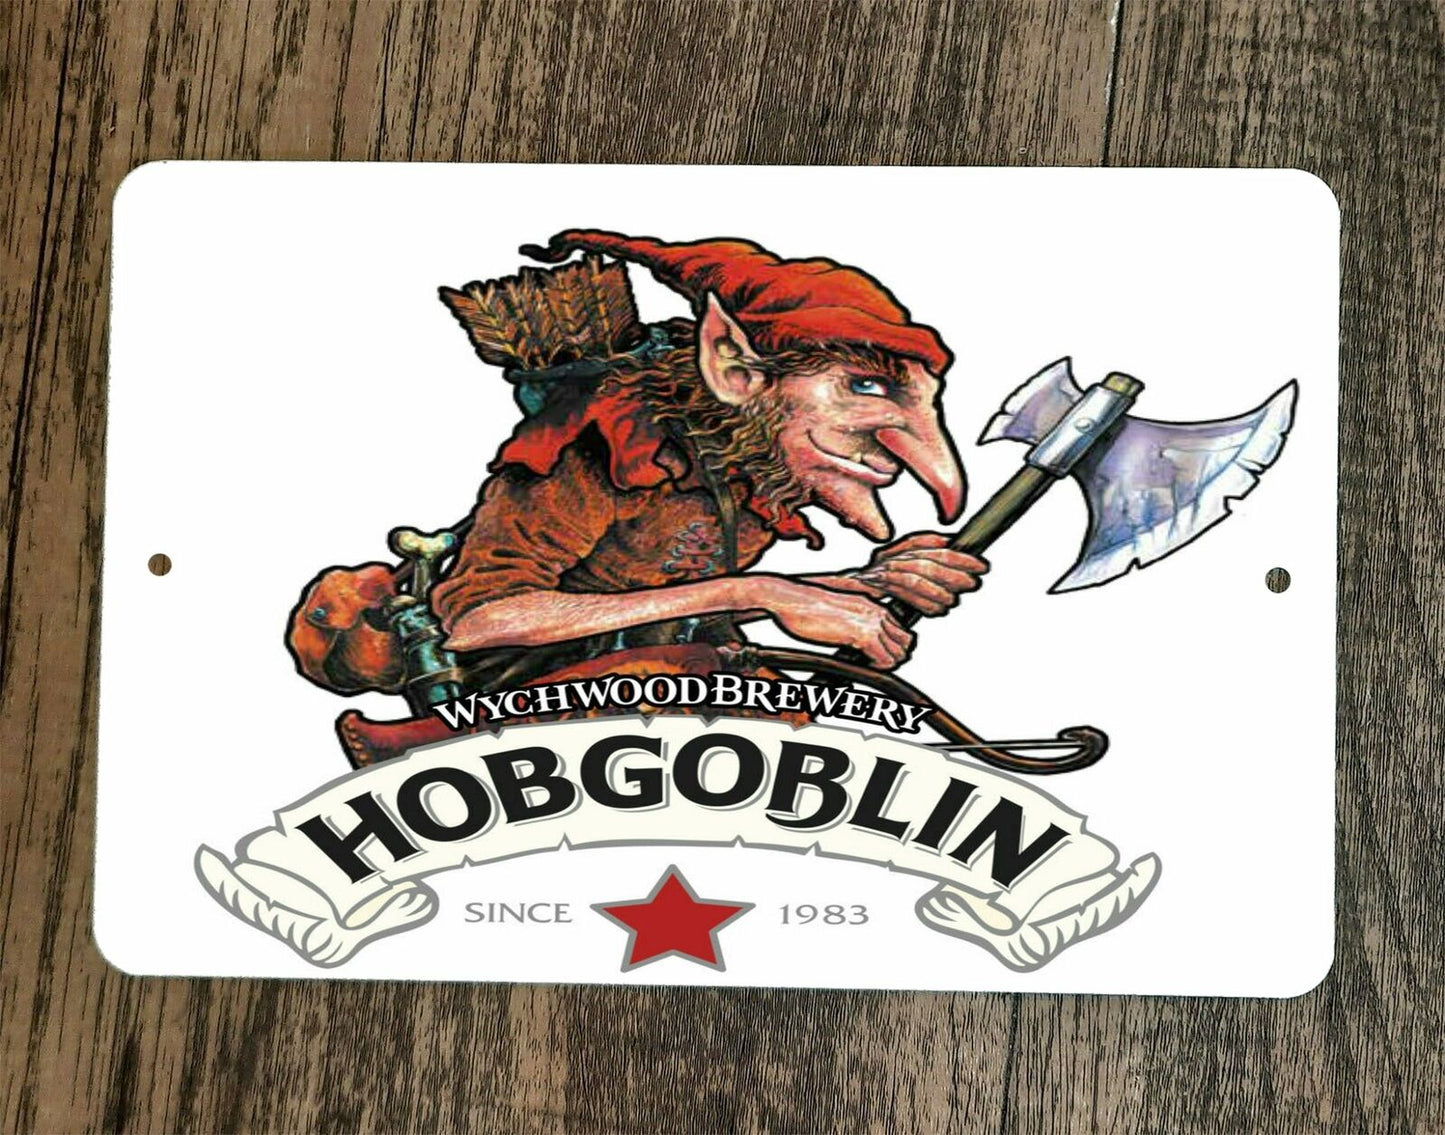 Hobgoblin Beer Since 1983 Wychwood Brewery 8x12 Metal Wall Bar Sign